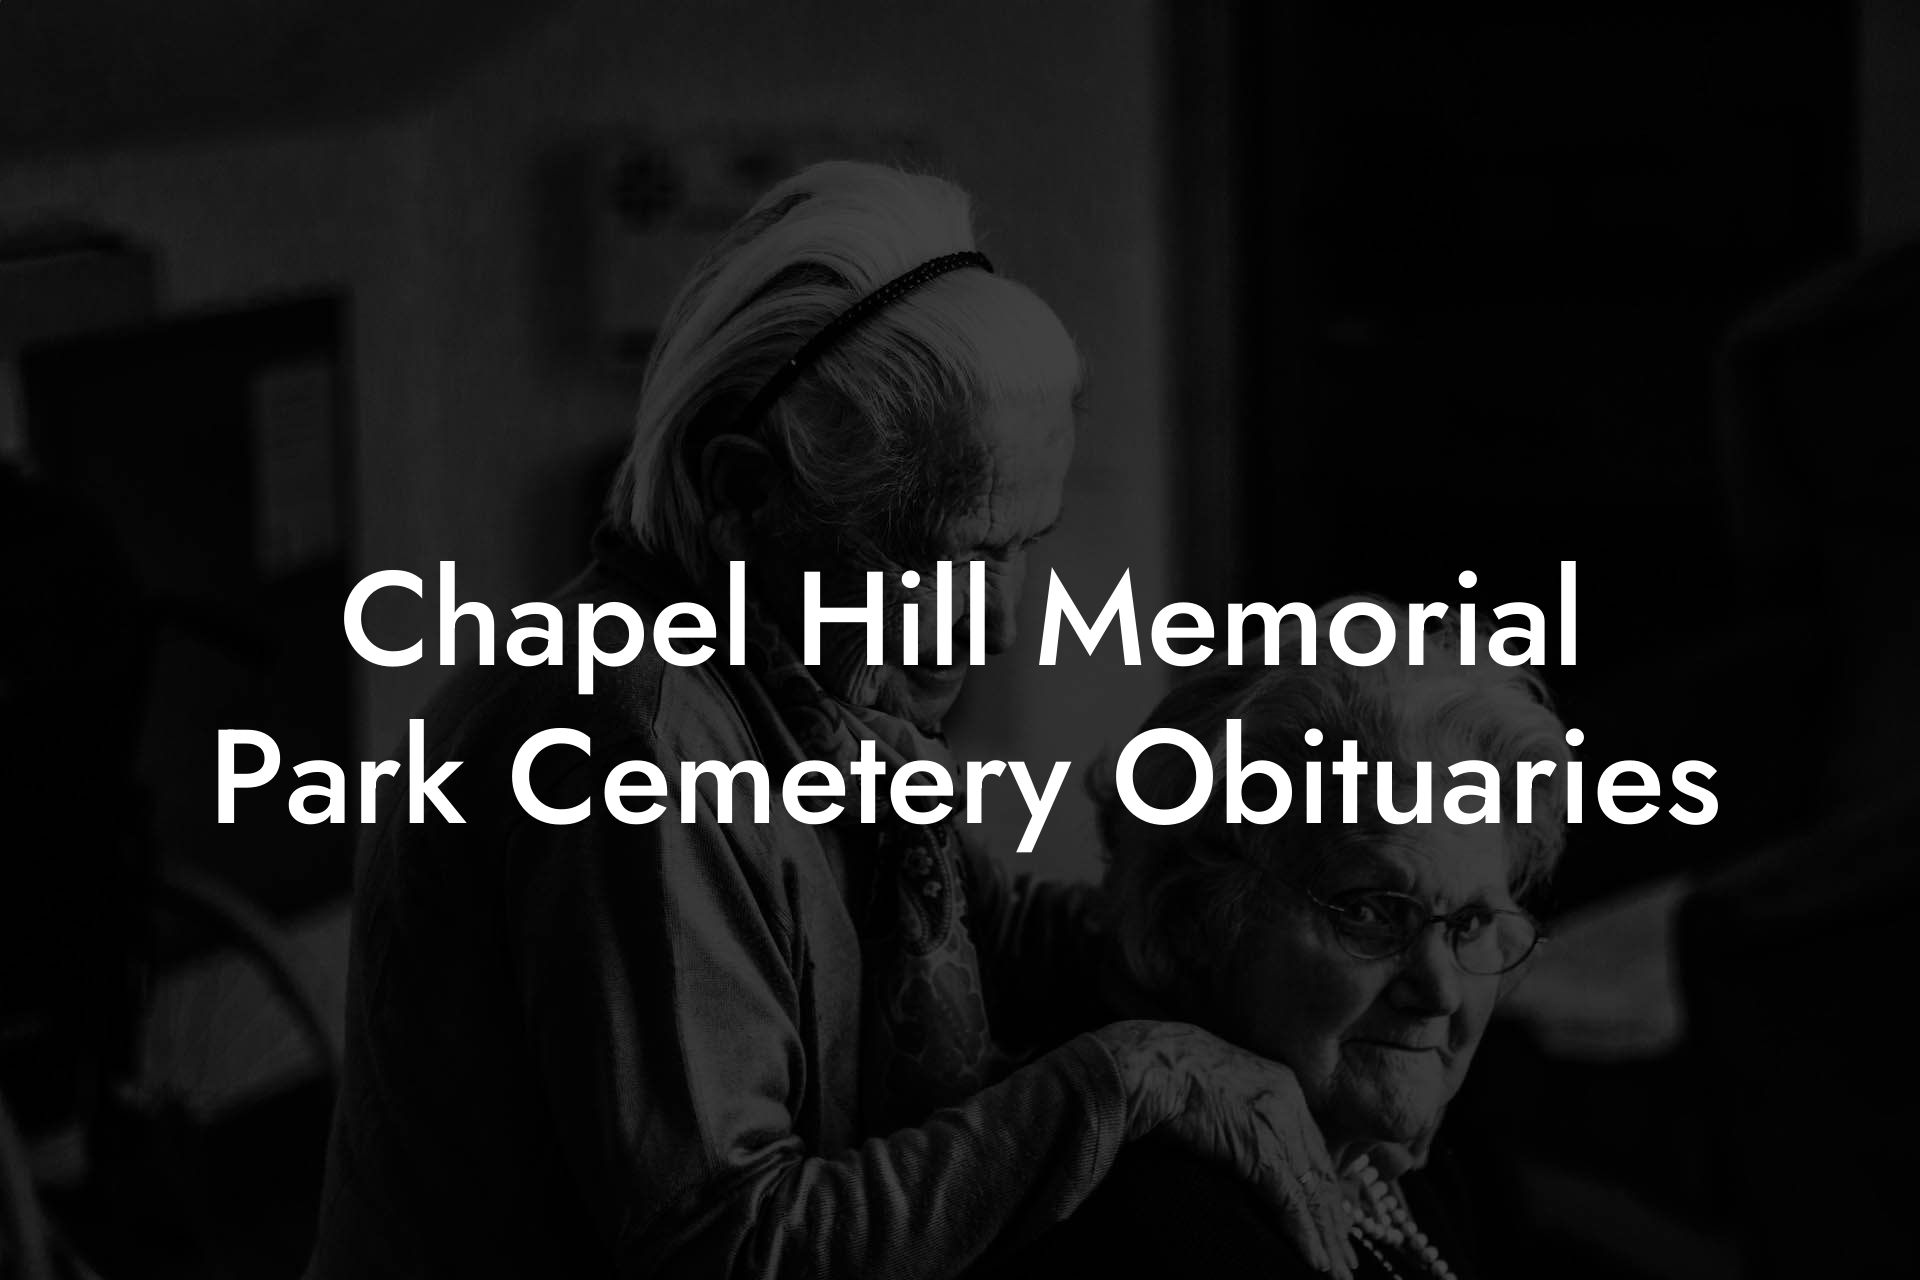 Chapel Hill Memorial Park Cemetery Obituaries